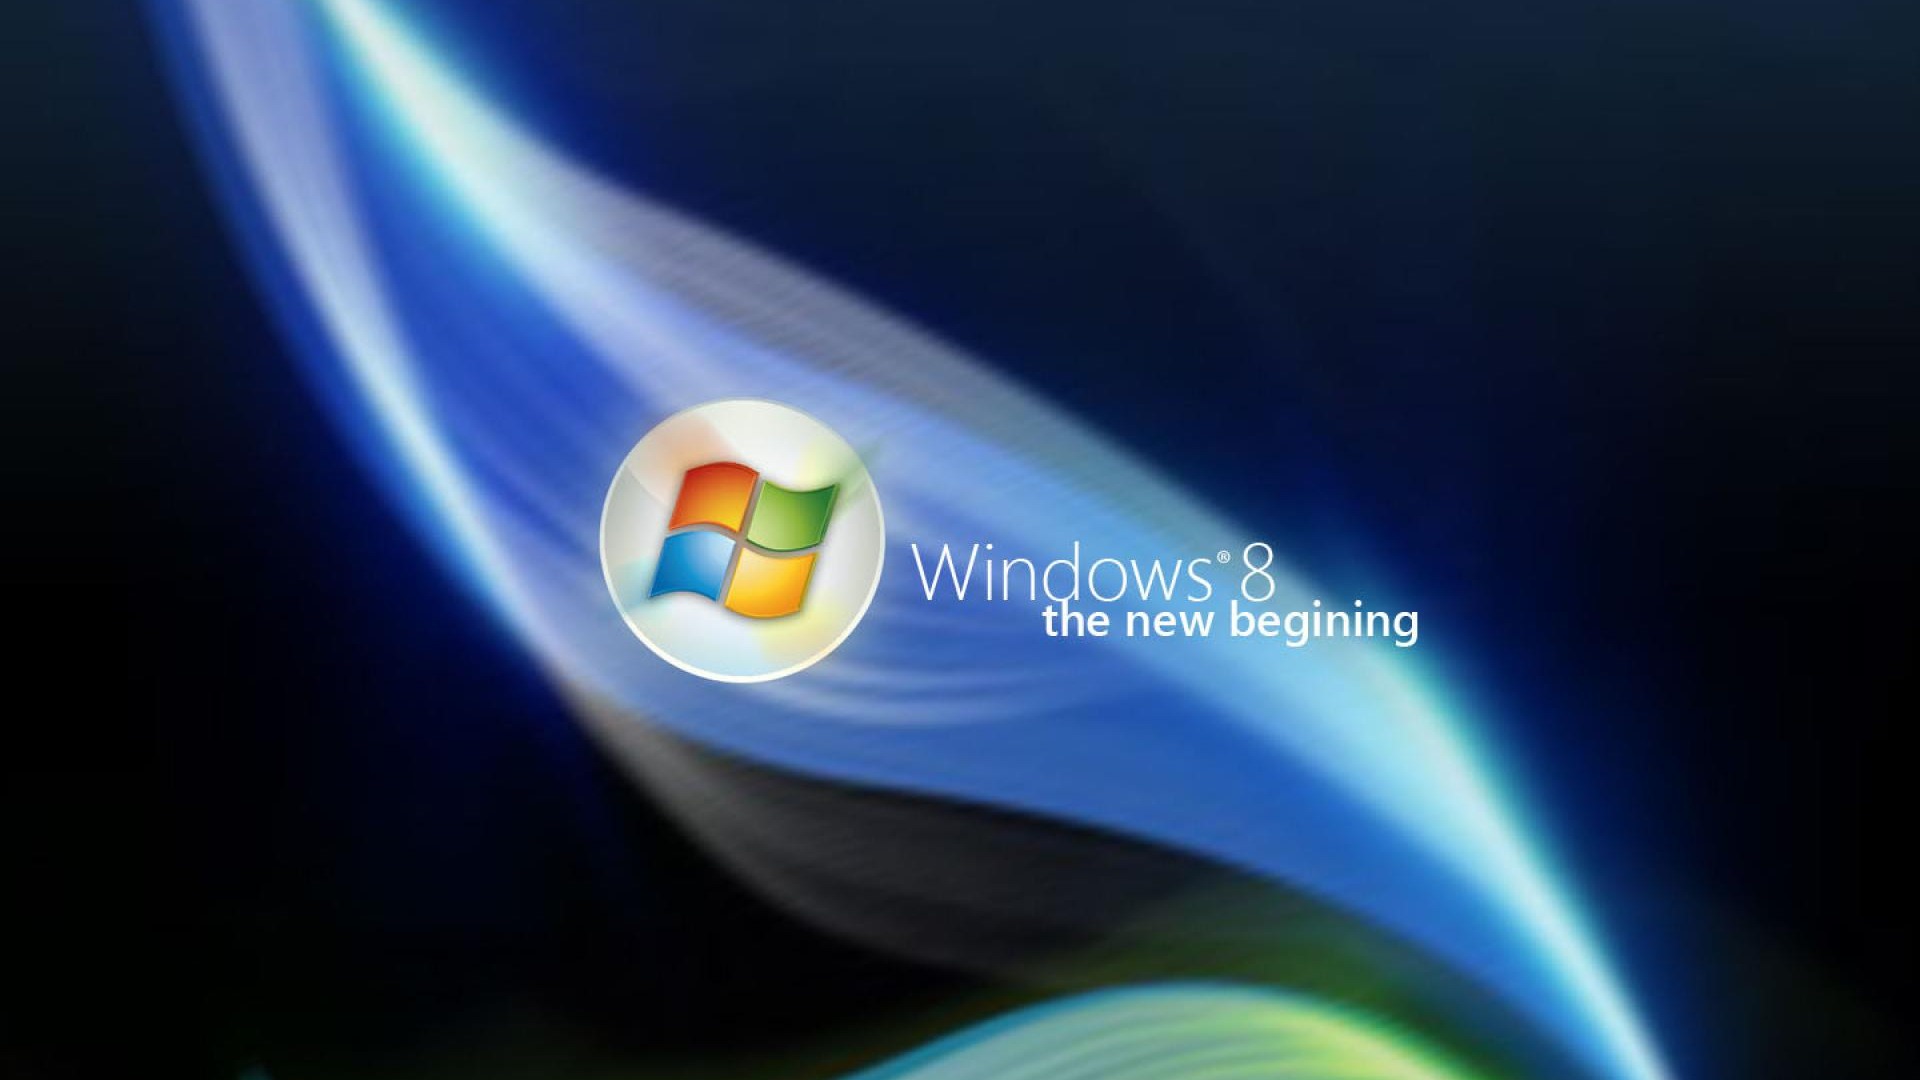 Windows 8 主題壁紙 (二) #10 - 1920x1080